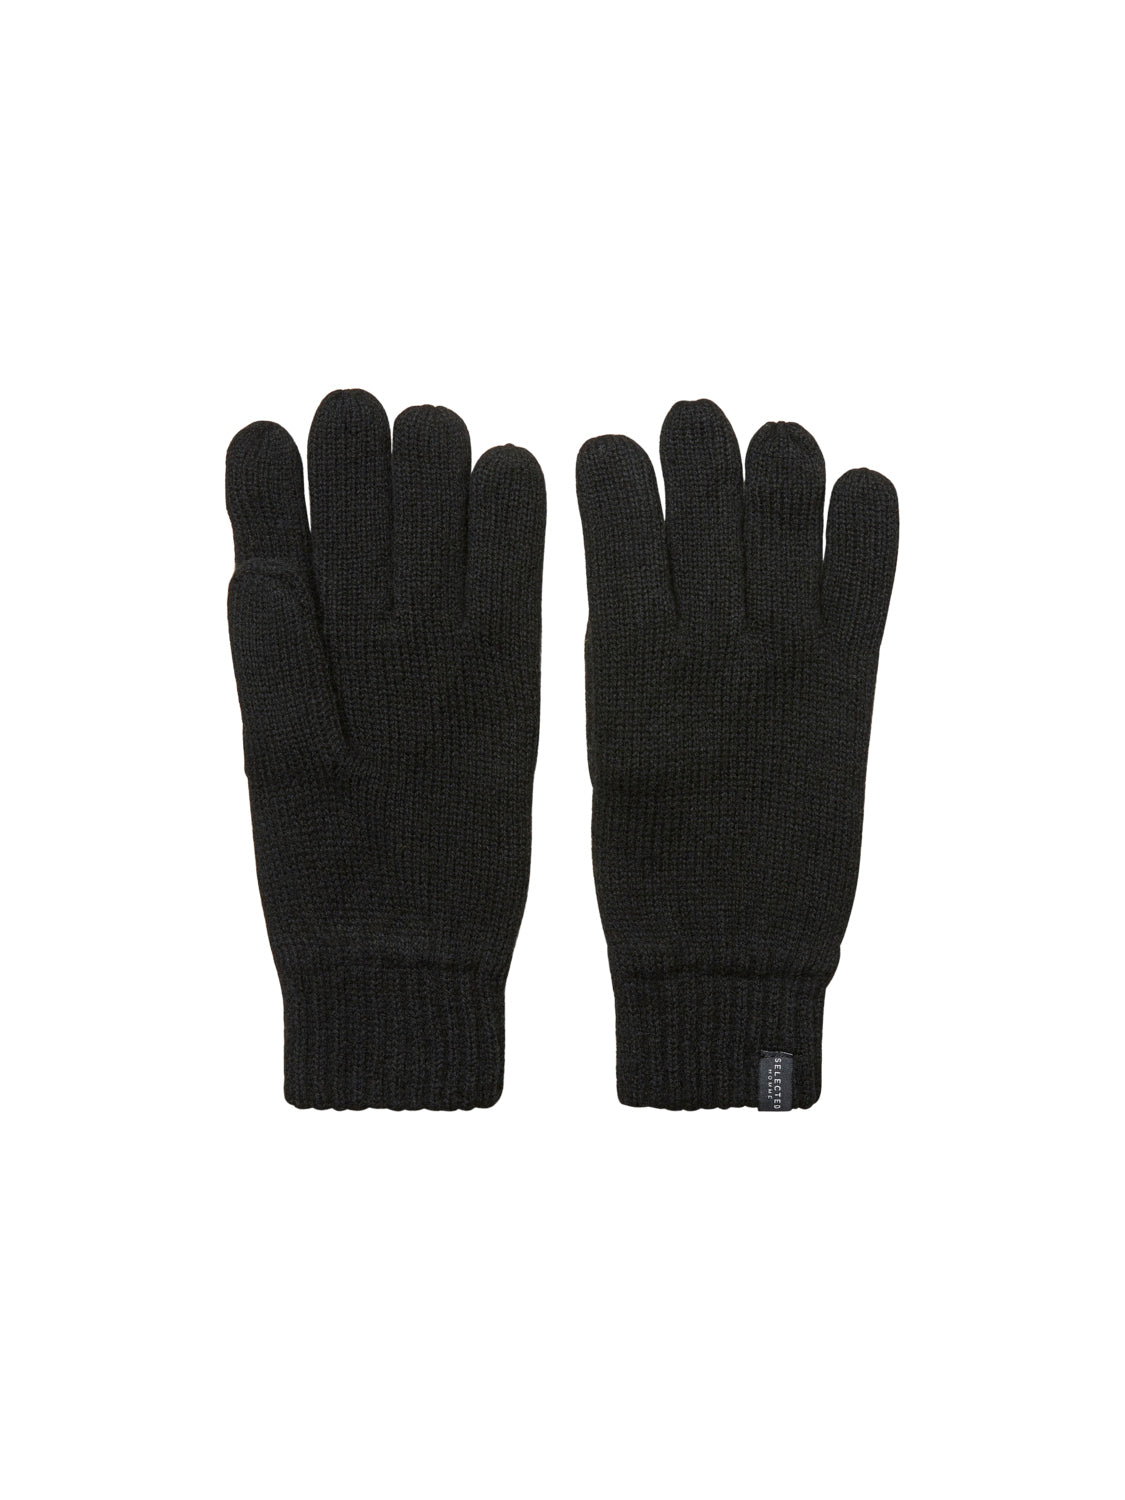 SLHNEWWOOL Gloves - Black